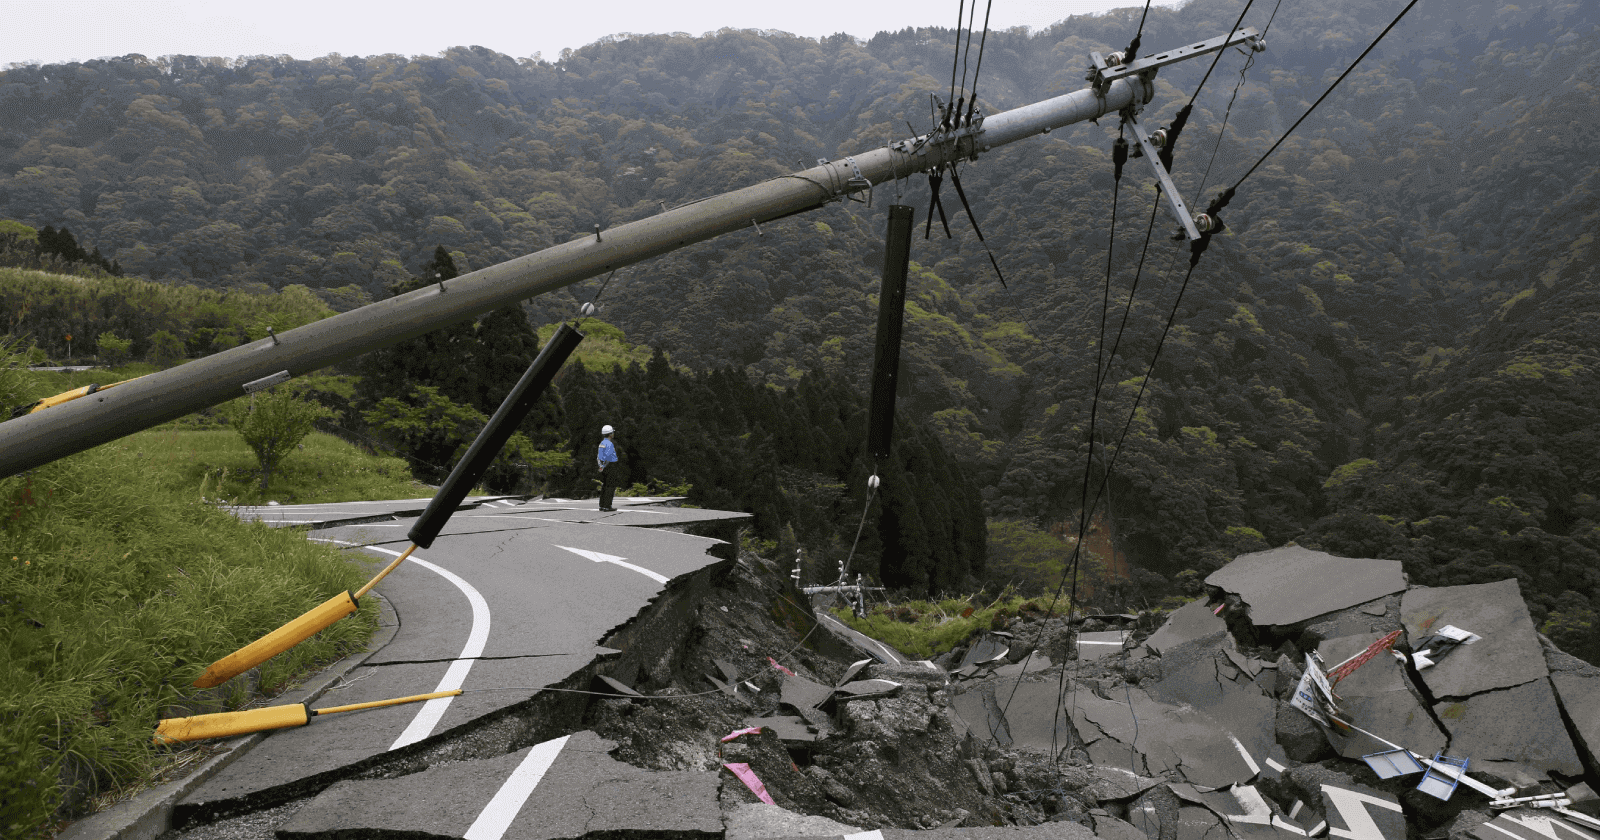 Does bike insurance cover earthquake damage?